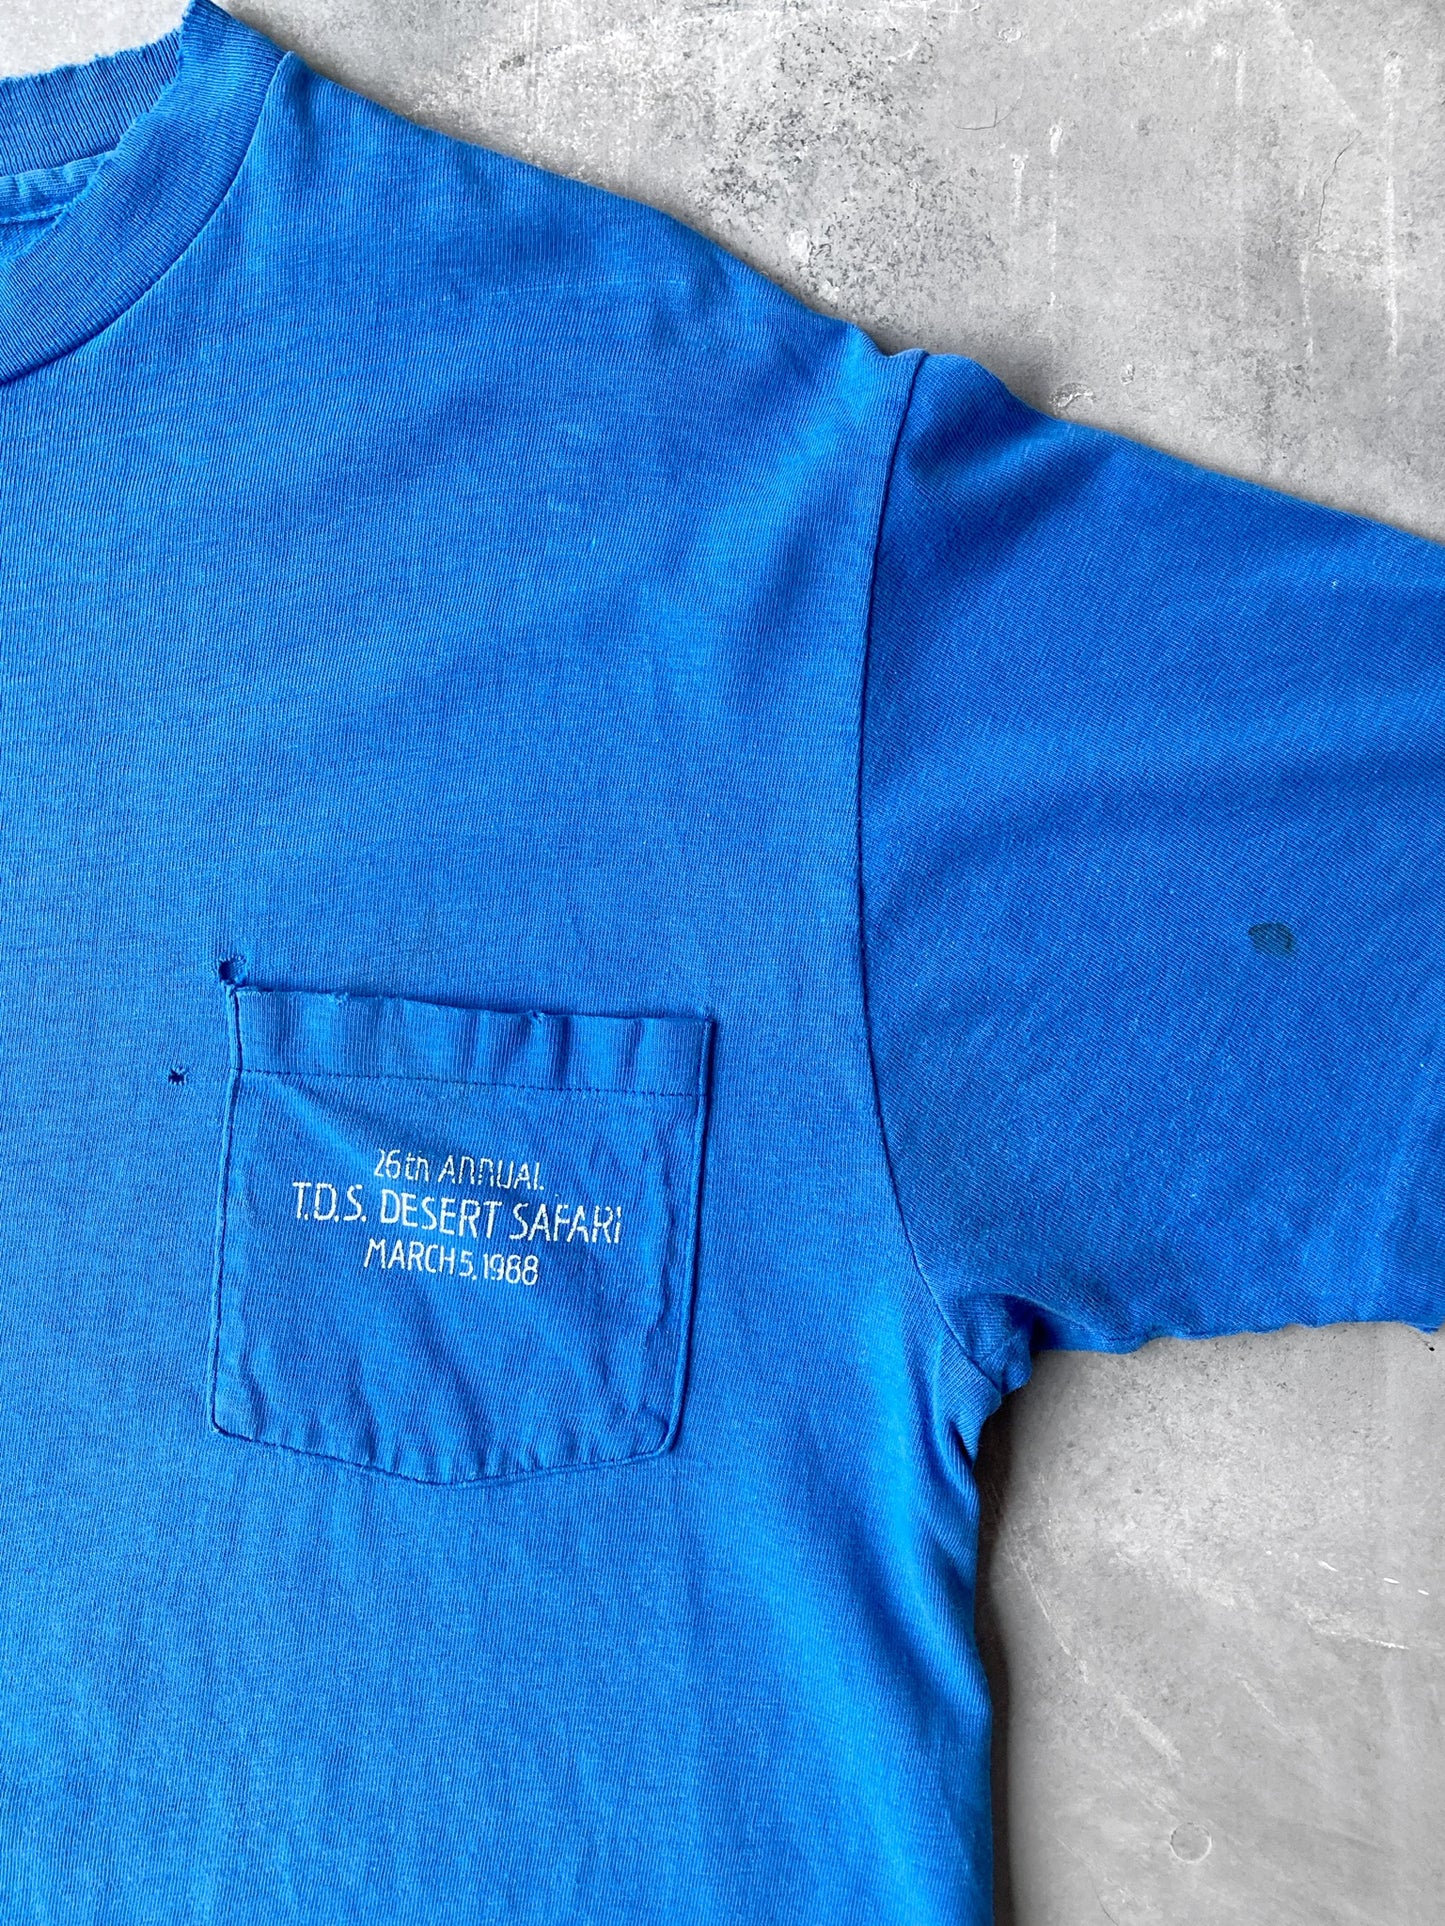 T.D.S. Desert Safari T-Shirt '88 - Medium